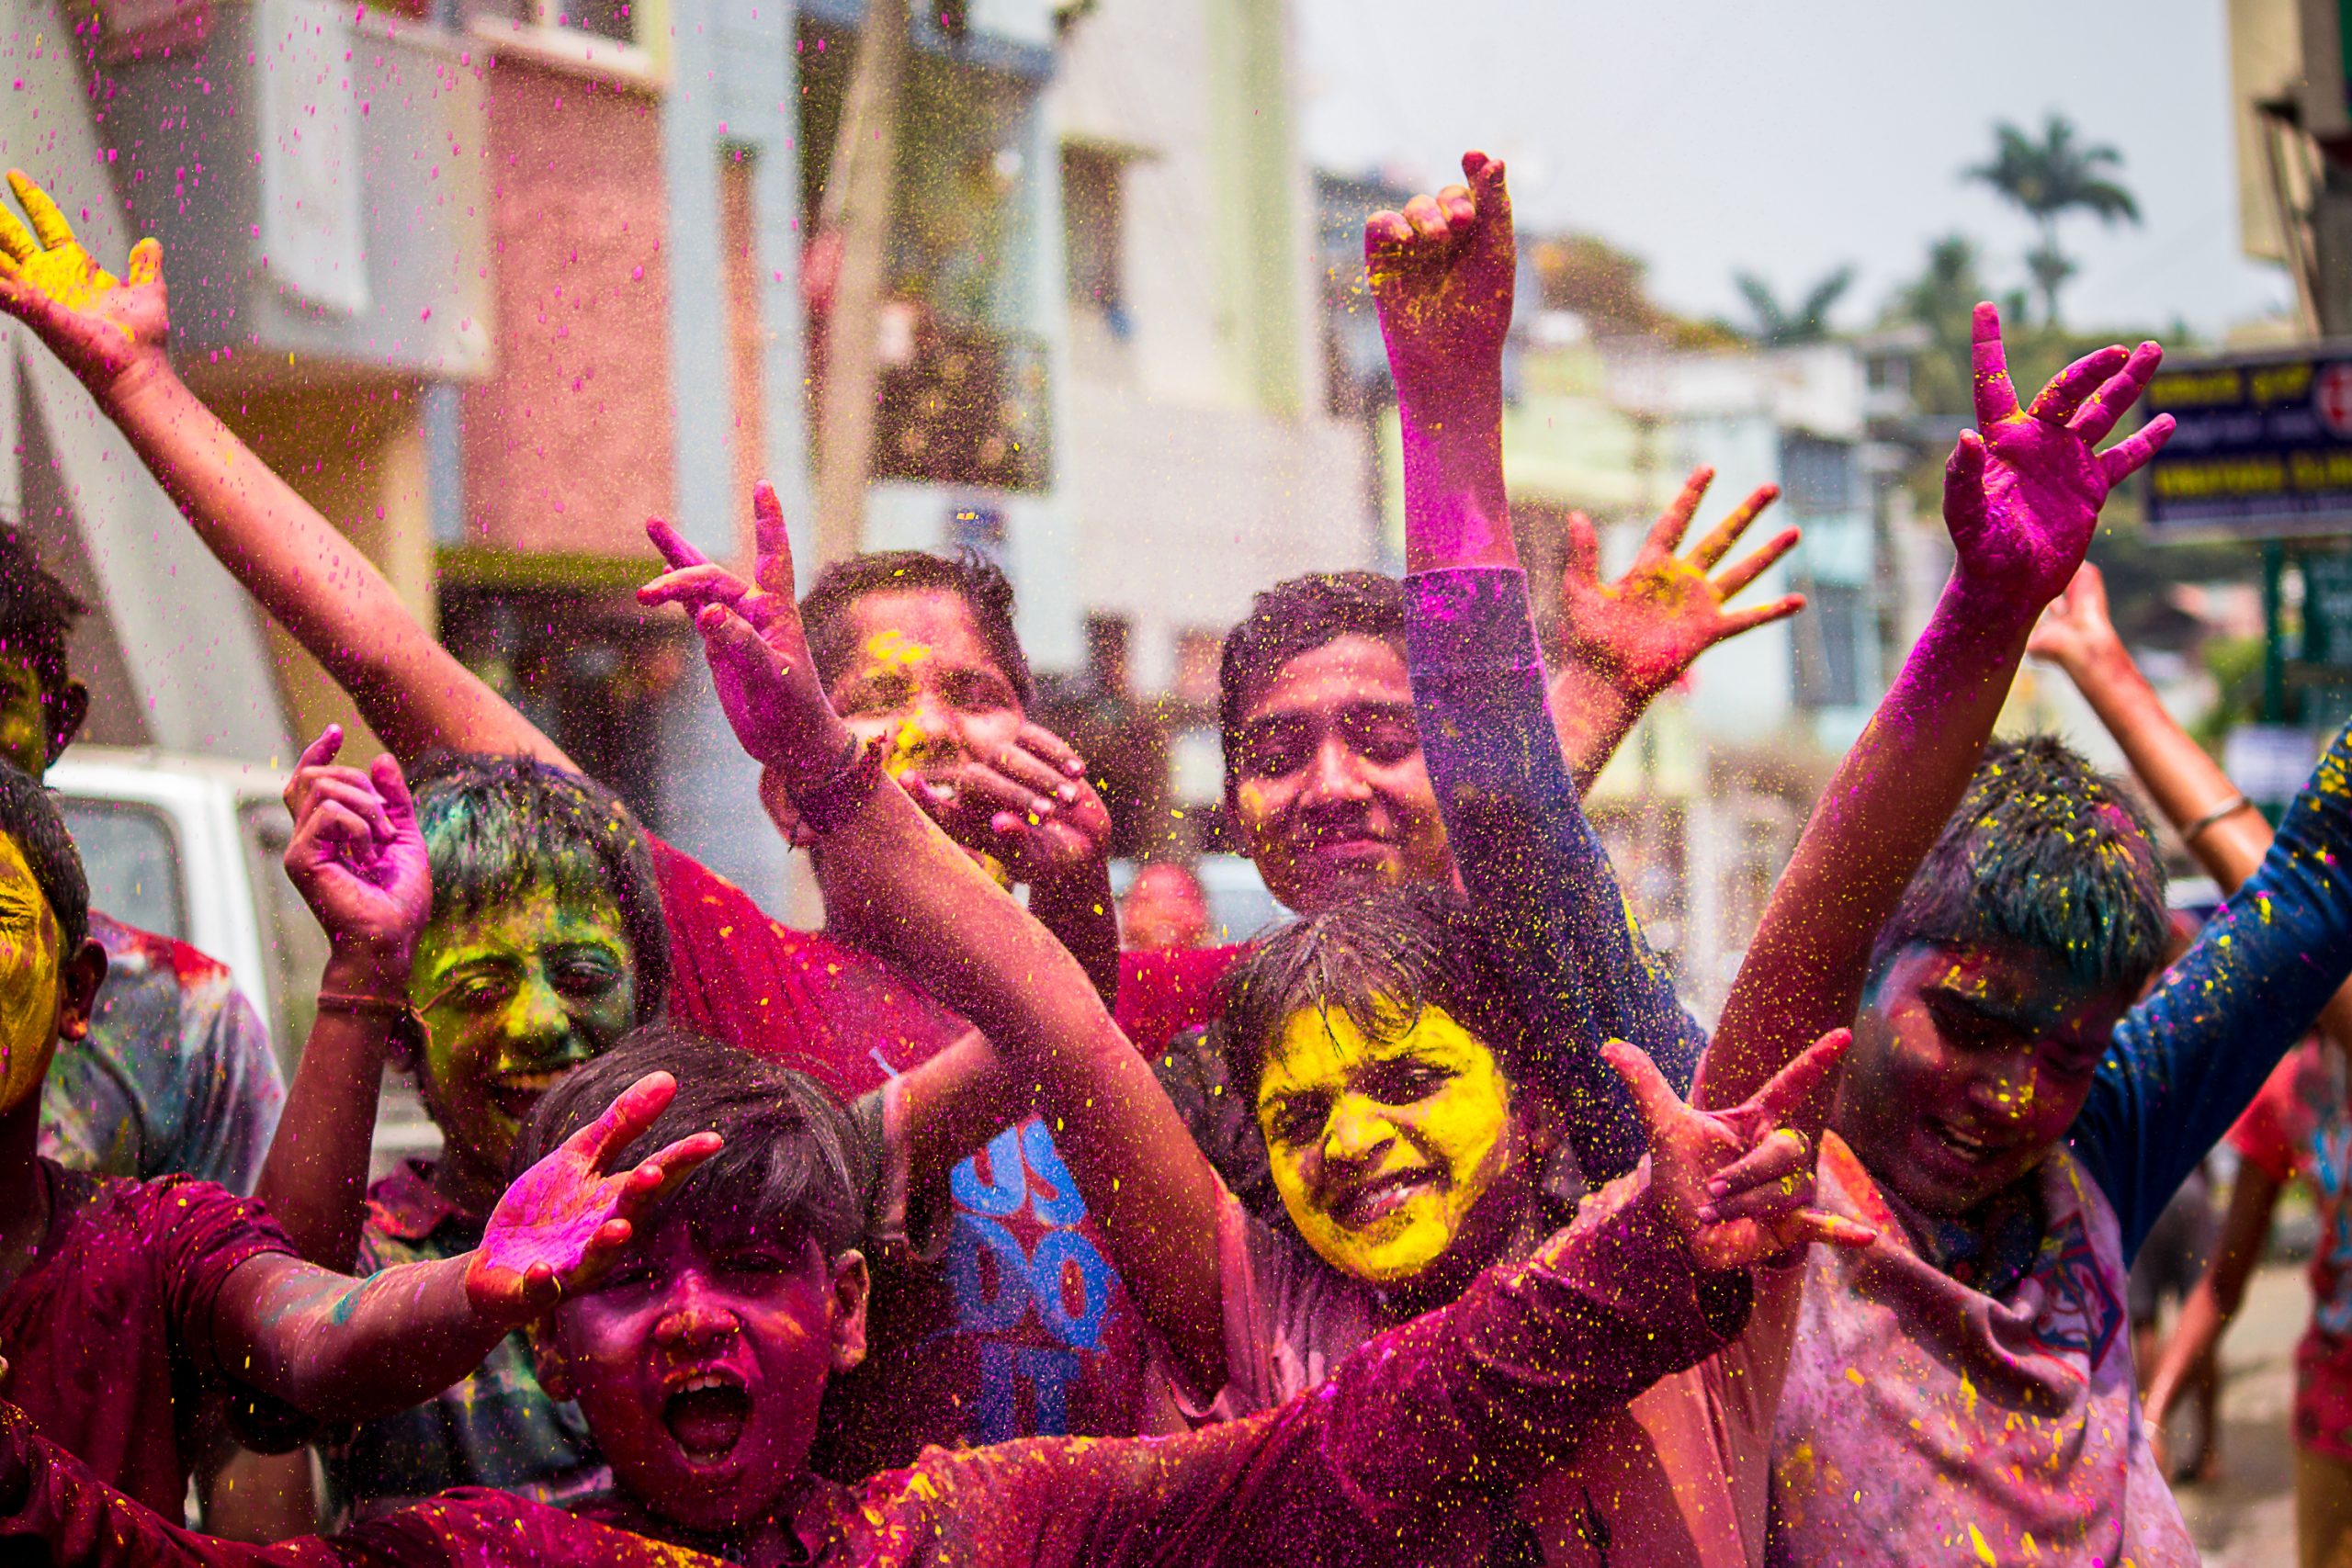 Kids in a street celebrating Holi festival